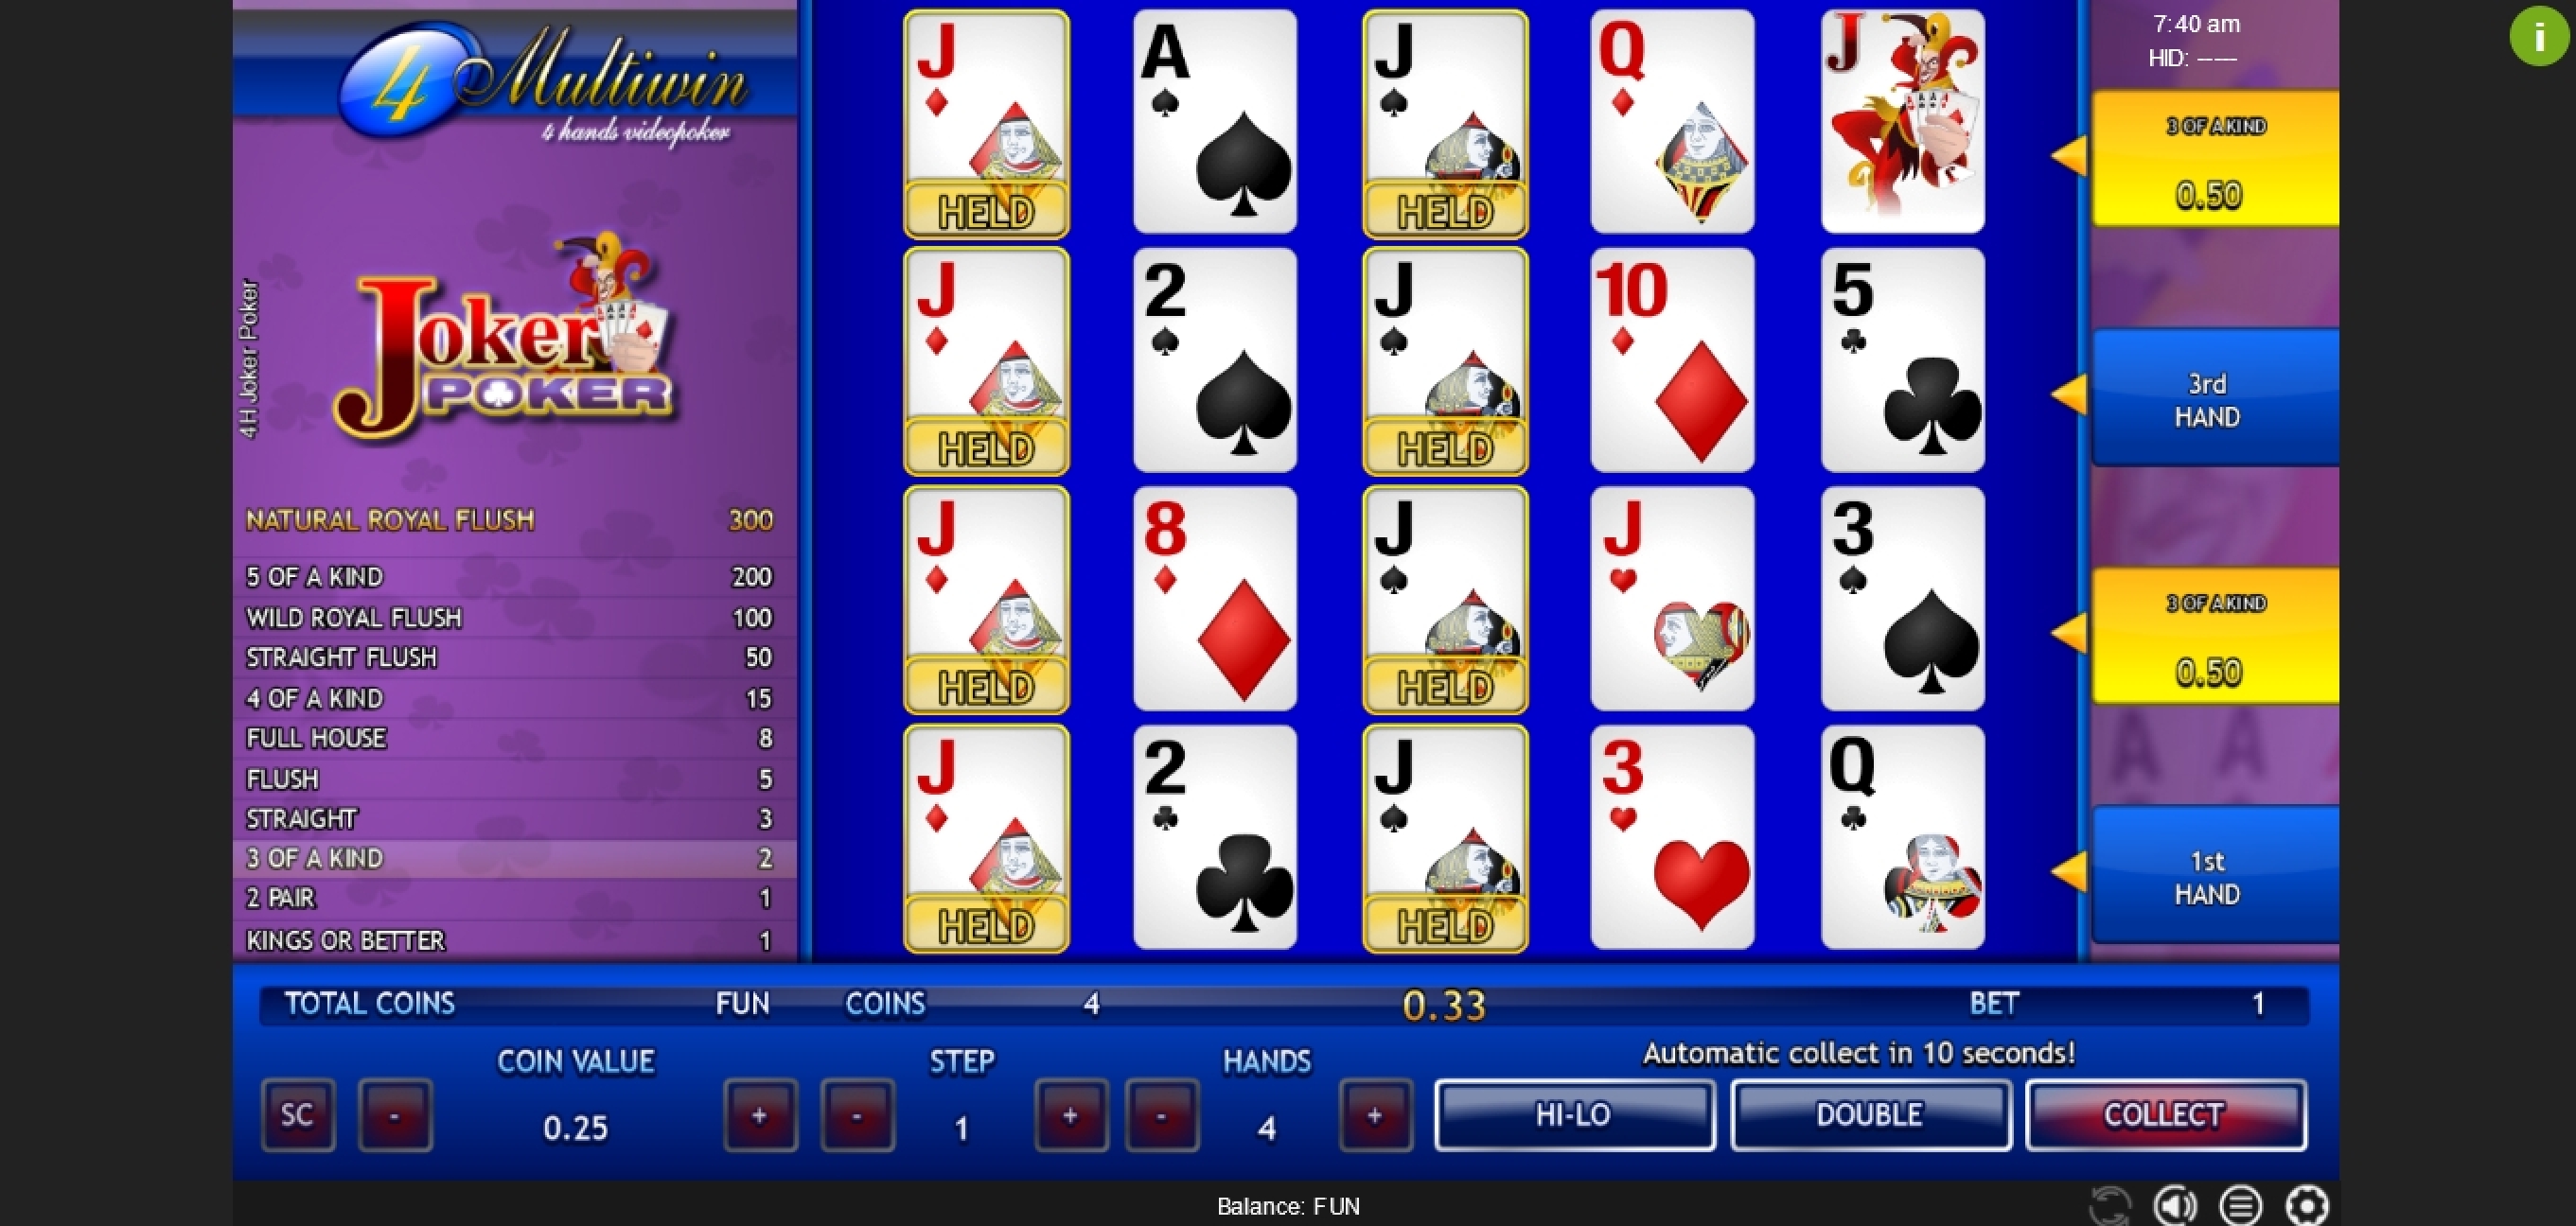 Win Money in Joker Poker 4 Hands Free Slot Game by Espresso Games